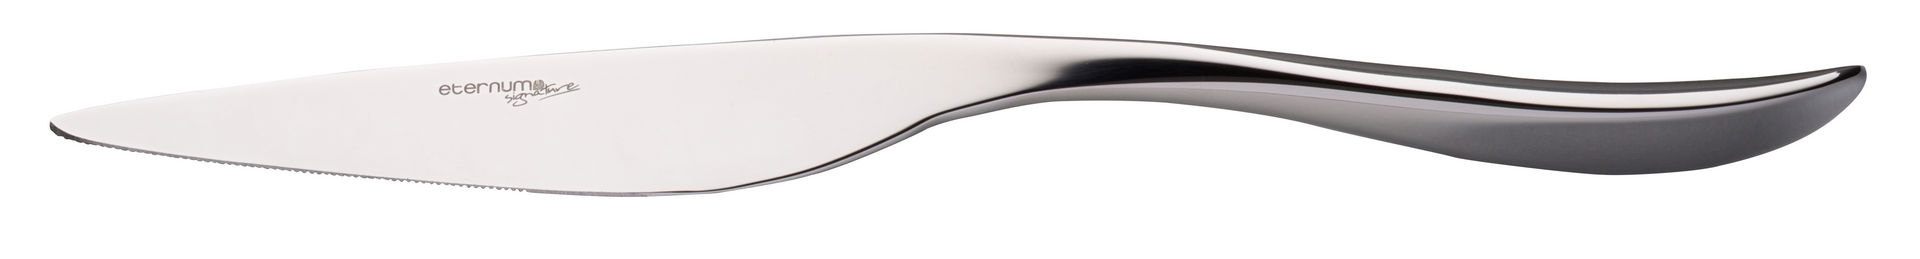 Petale Table Knife - F32001-000000-B01012 (Pack of 12)